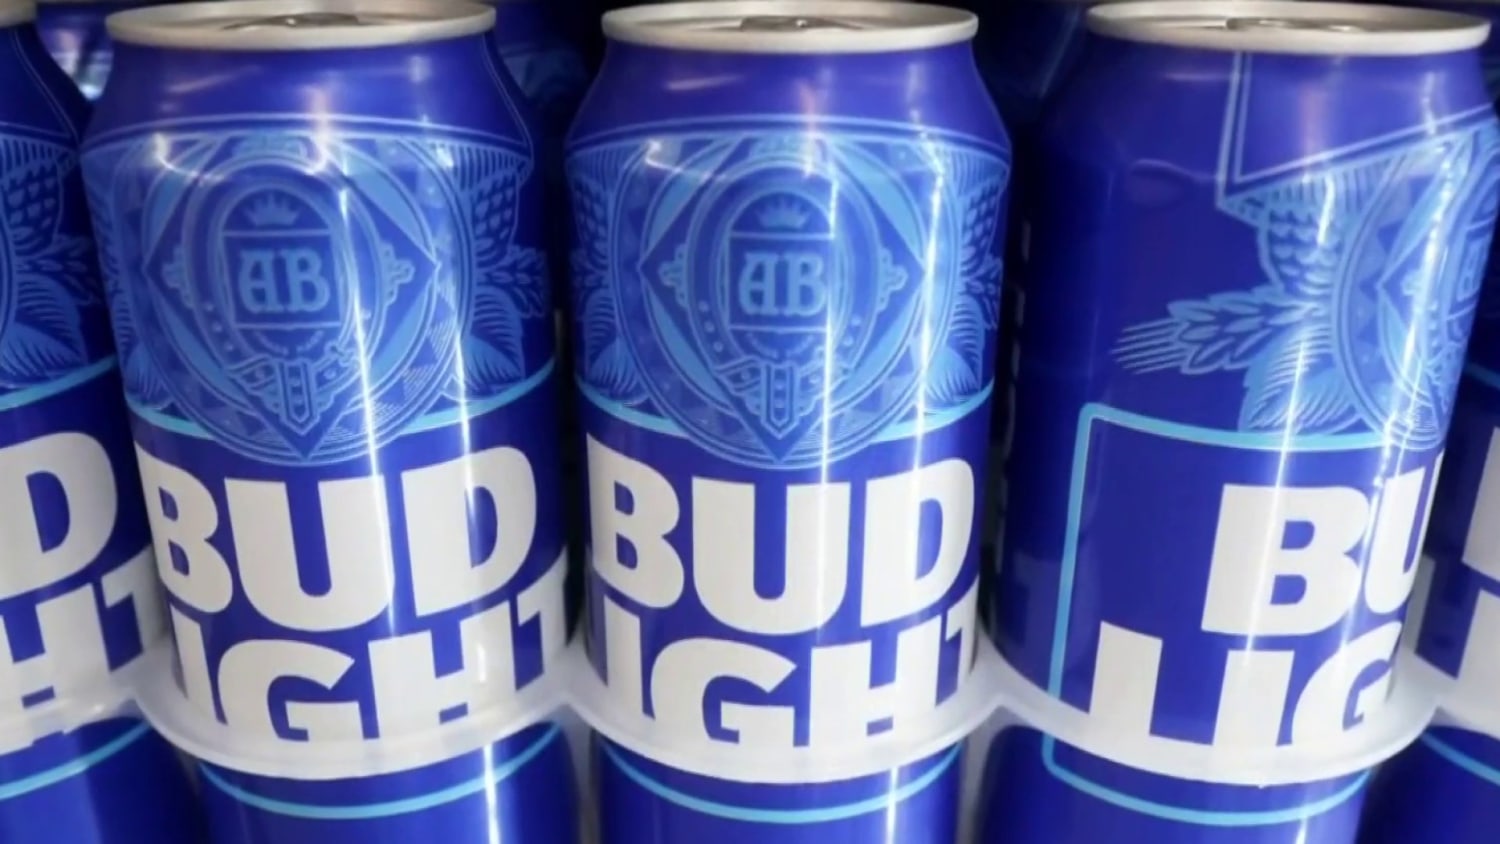 How Modelo Especial became America's No. 1 beer amid Bud